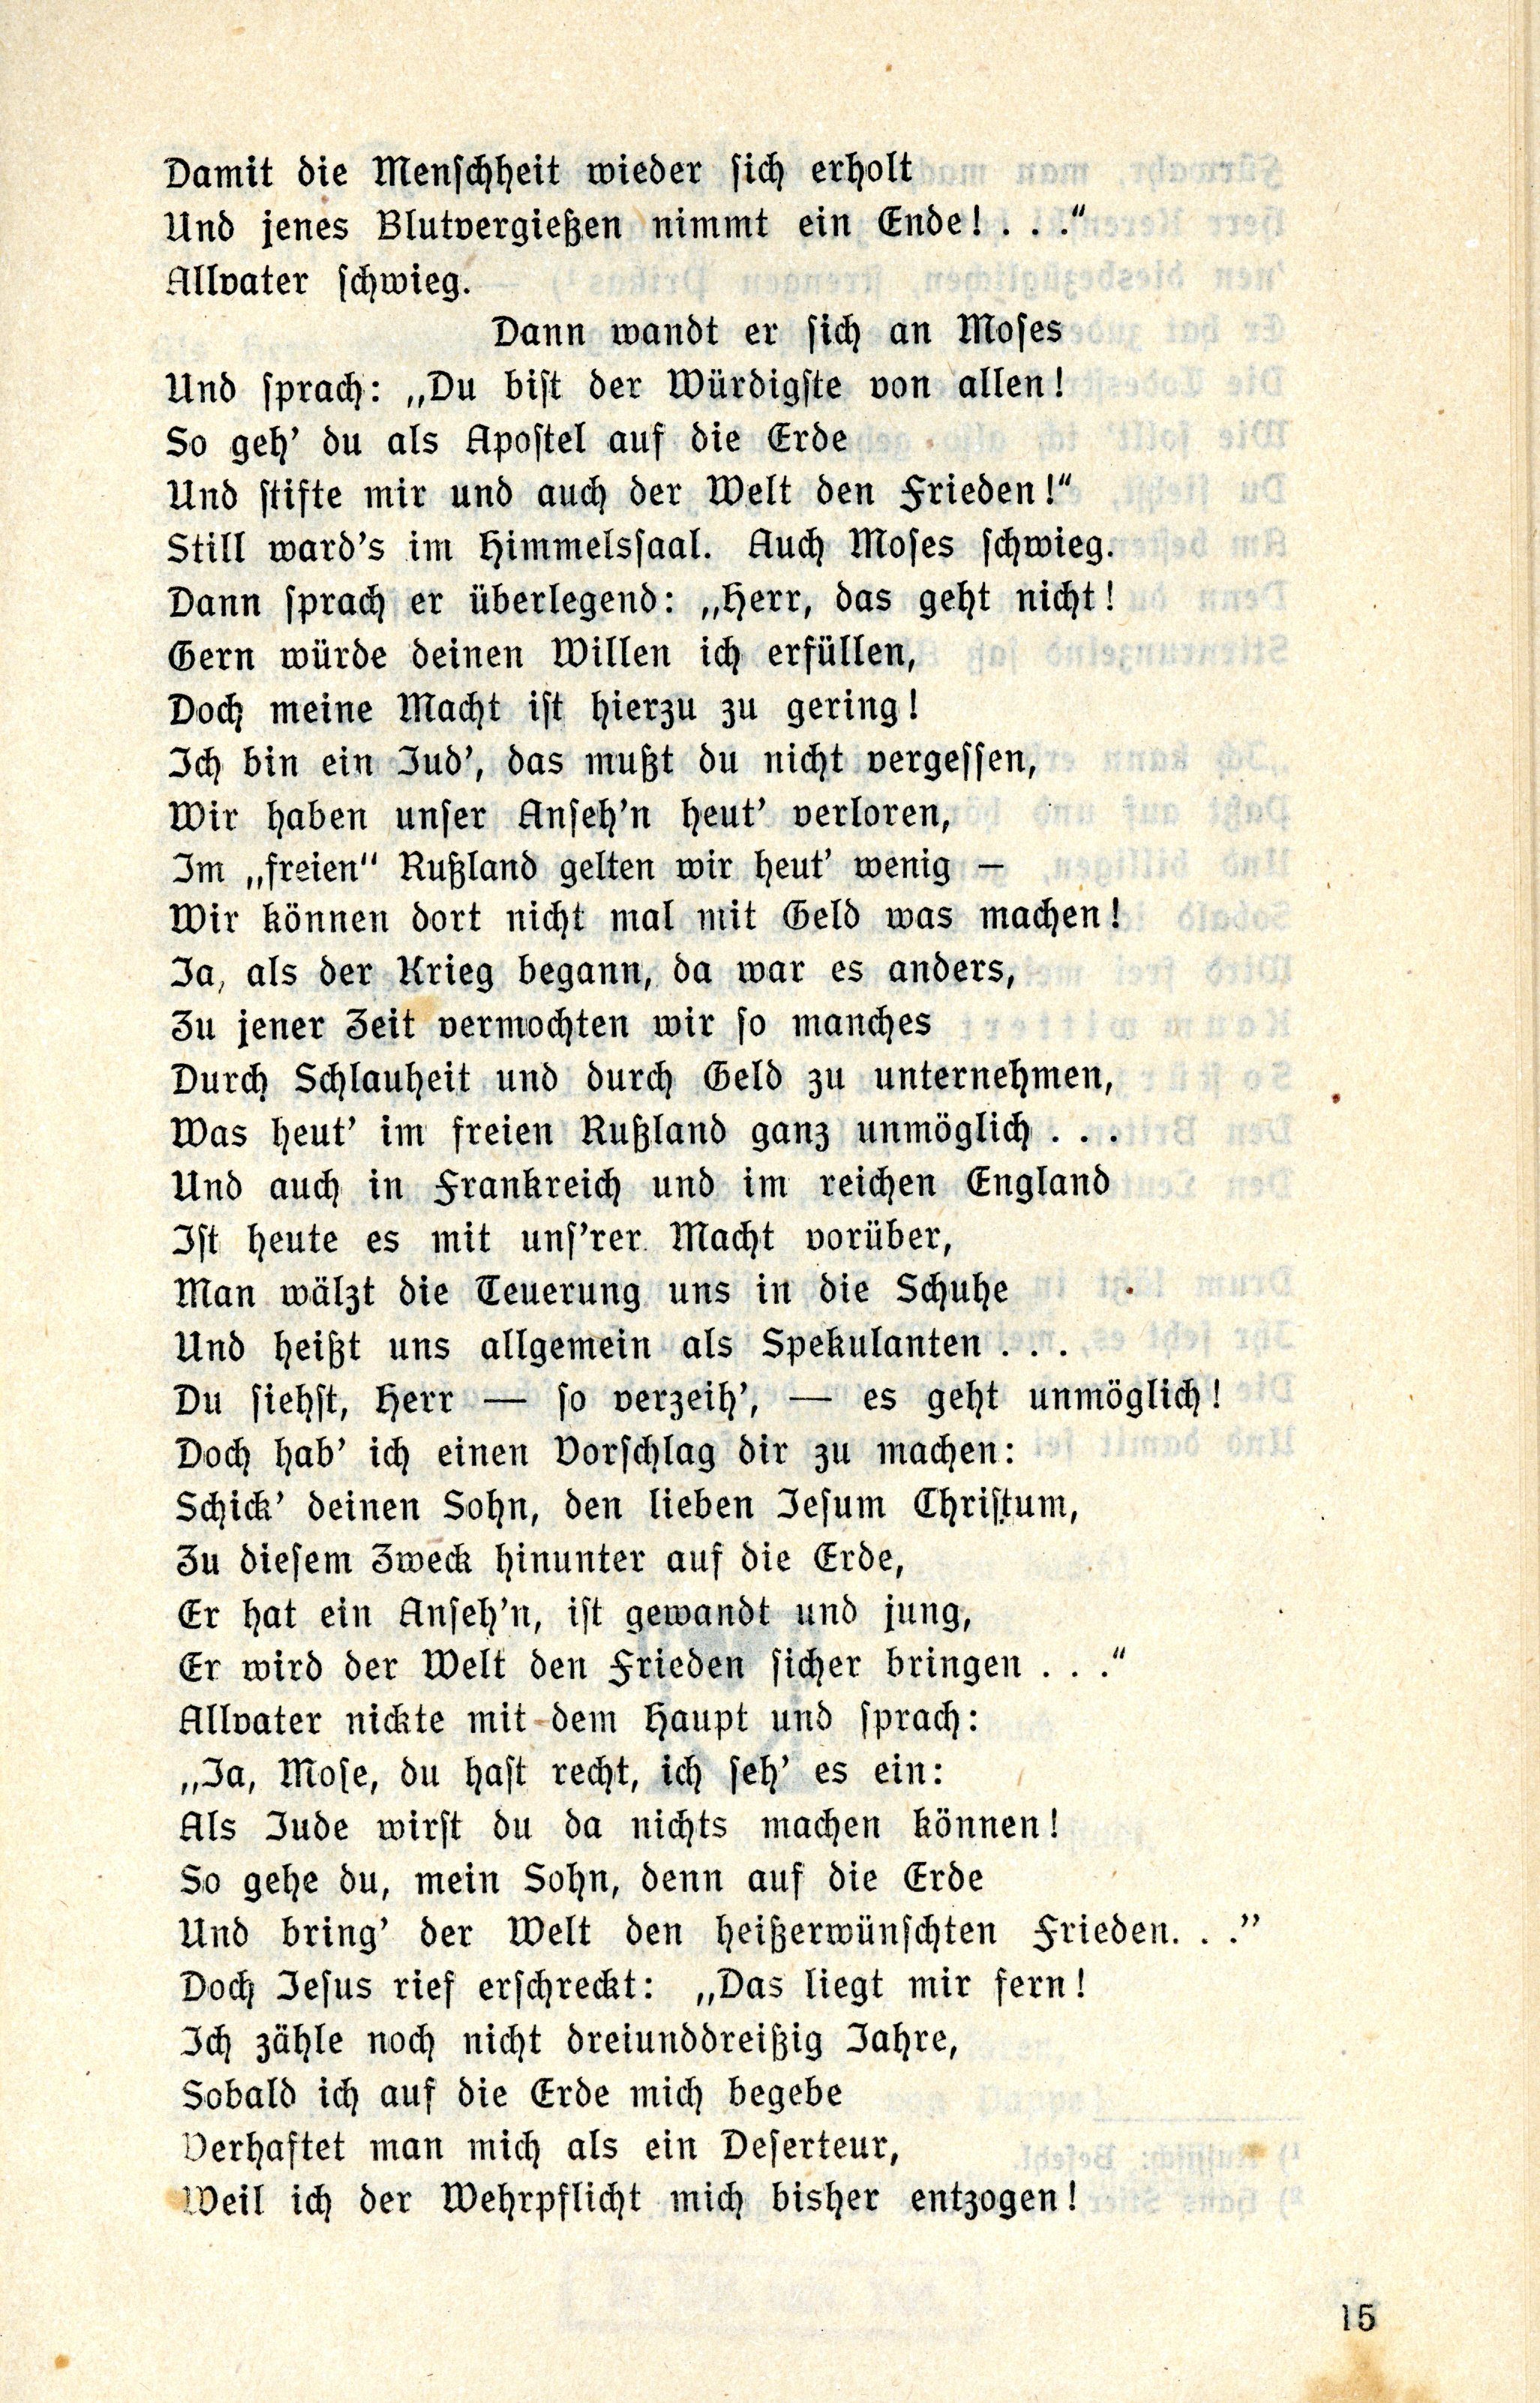 Der Balte im Maulkorb (1917) | 16. (15) Main body of text